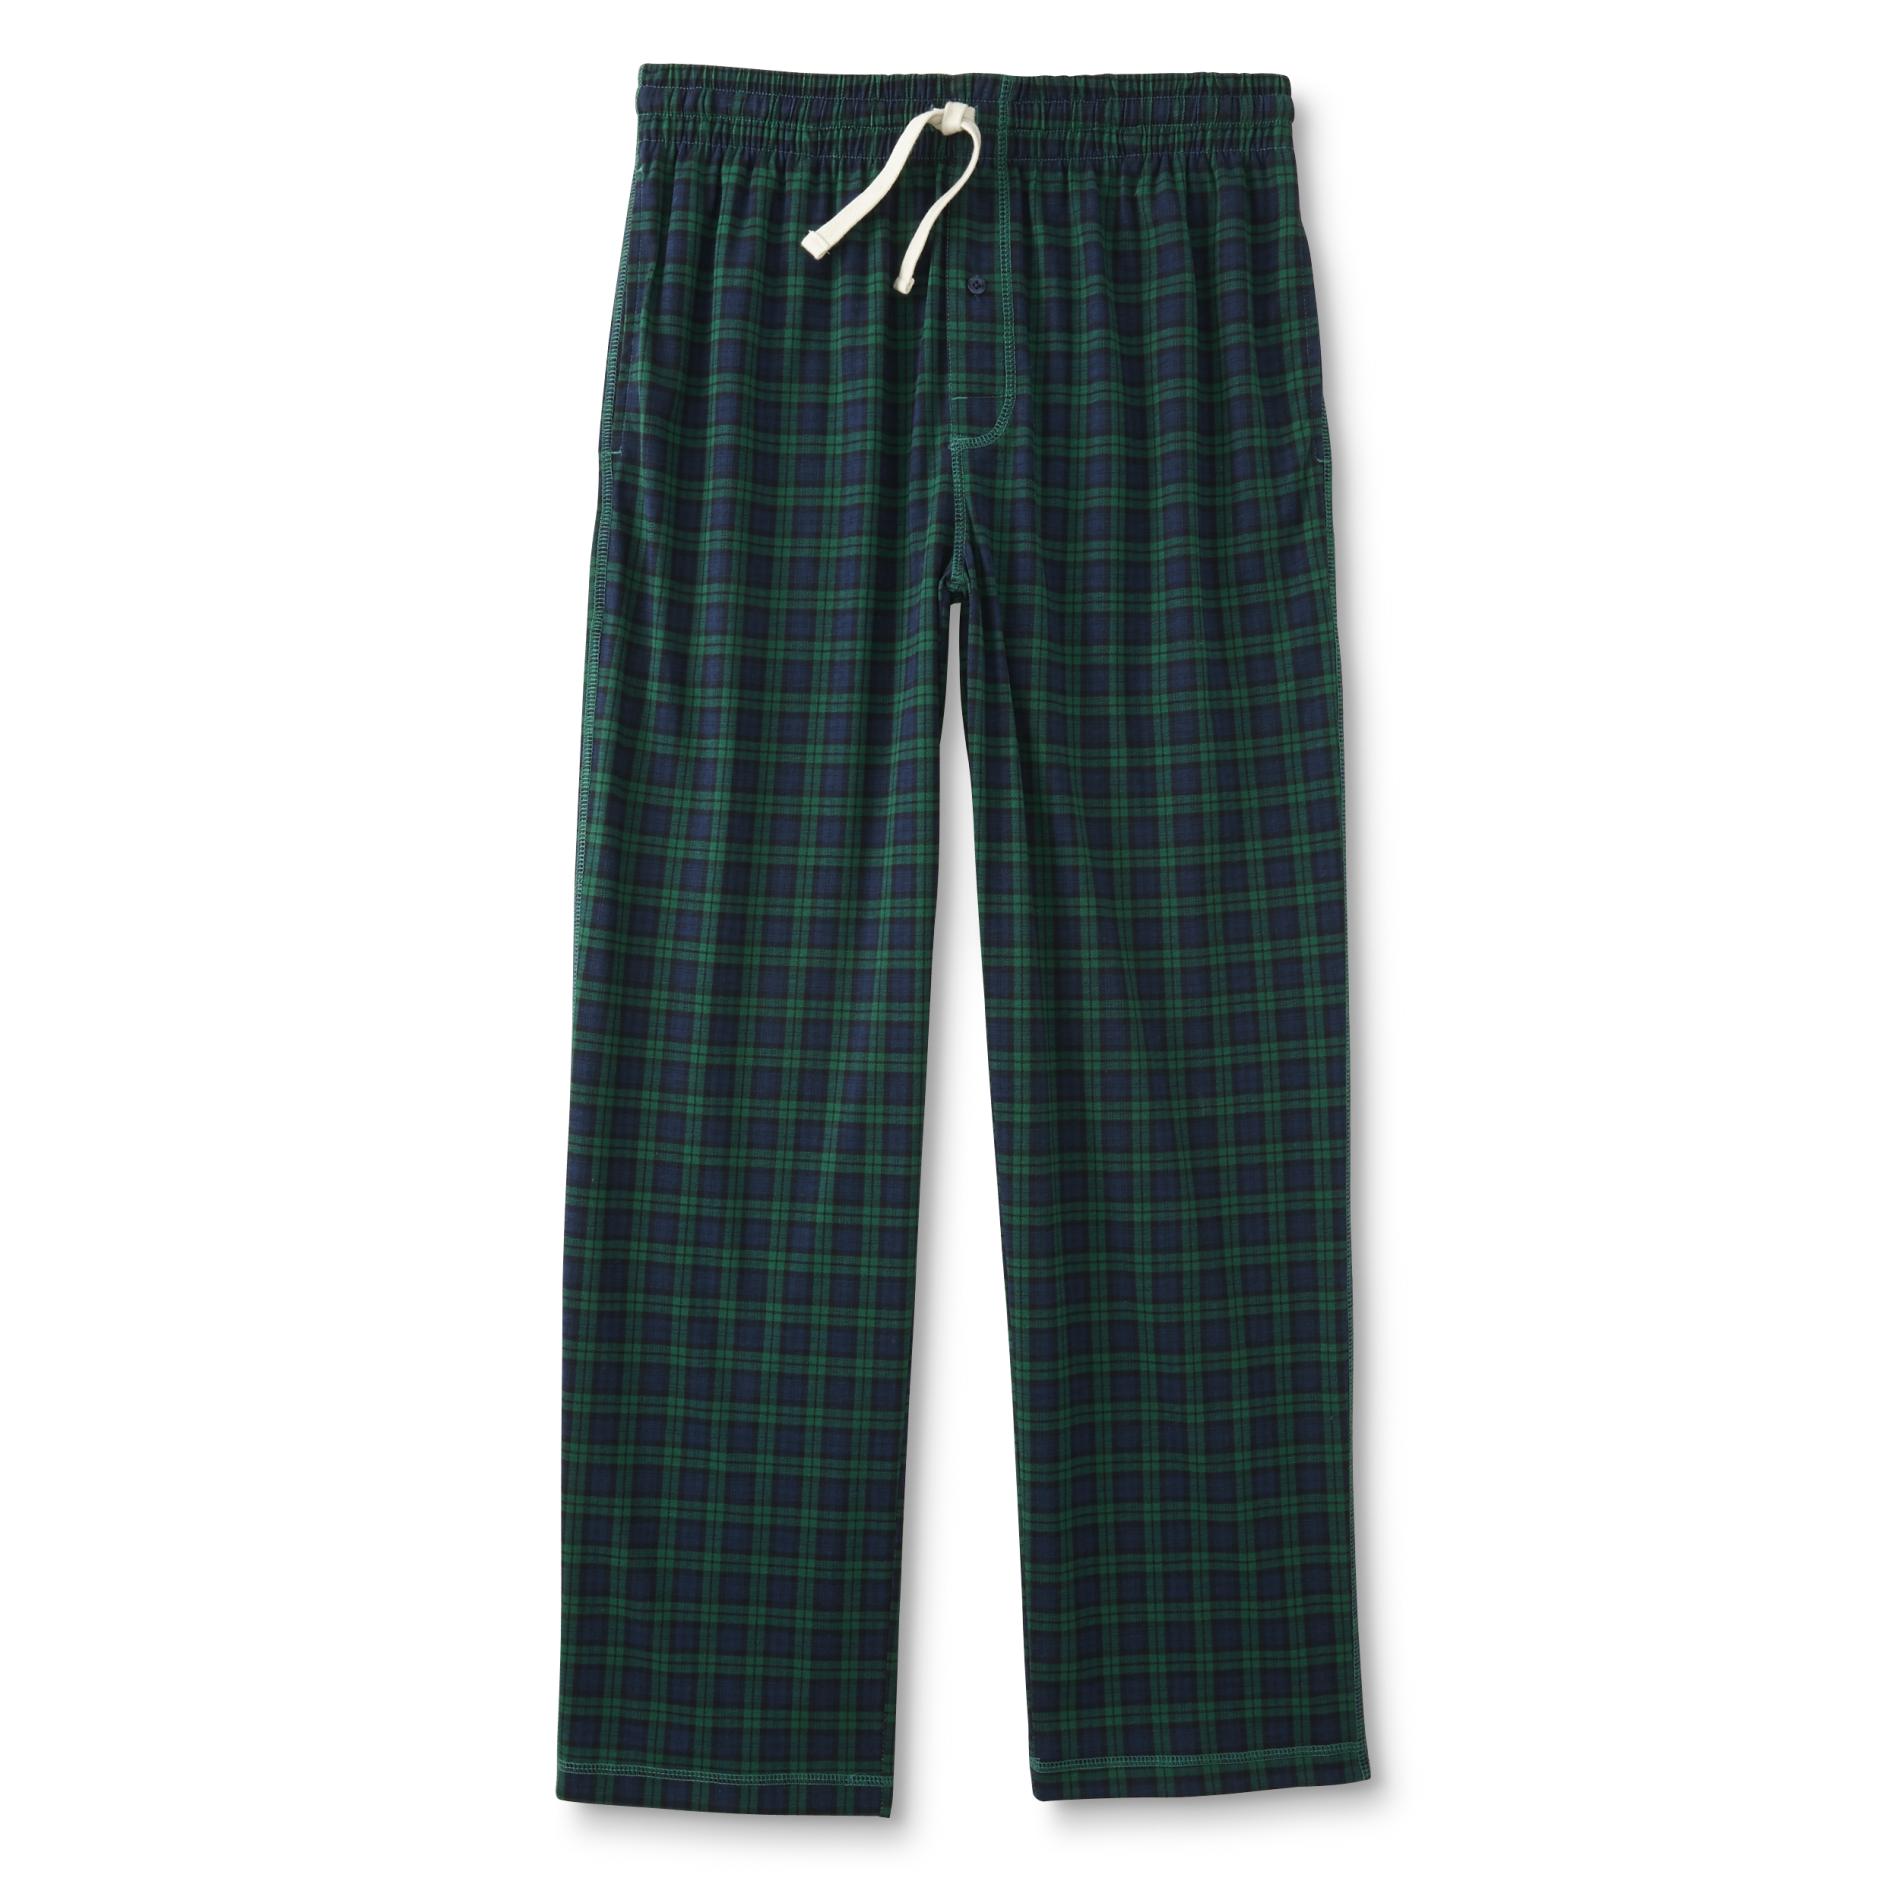 Joe Boxer Men's Pajama Pants - Plaid